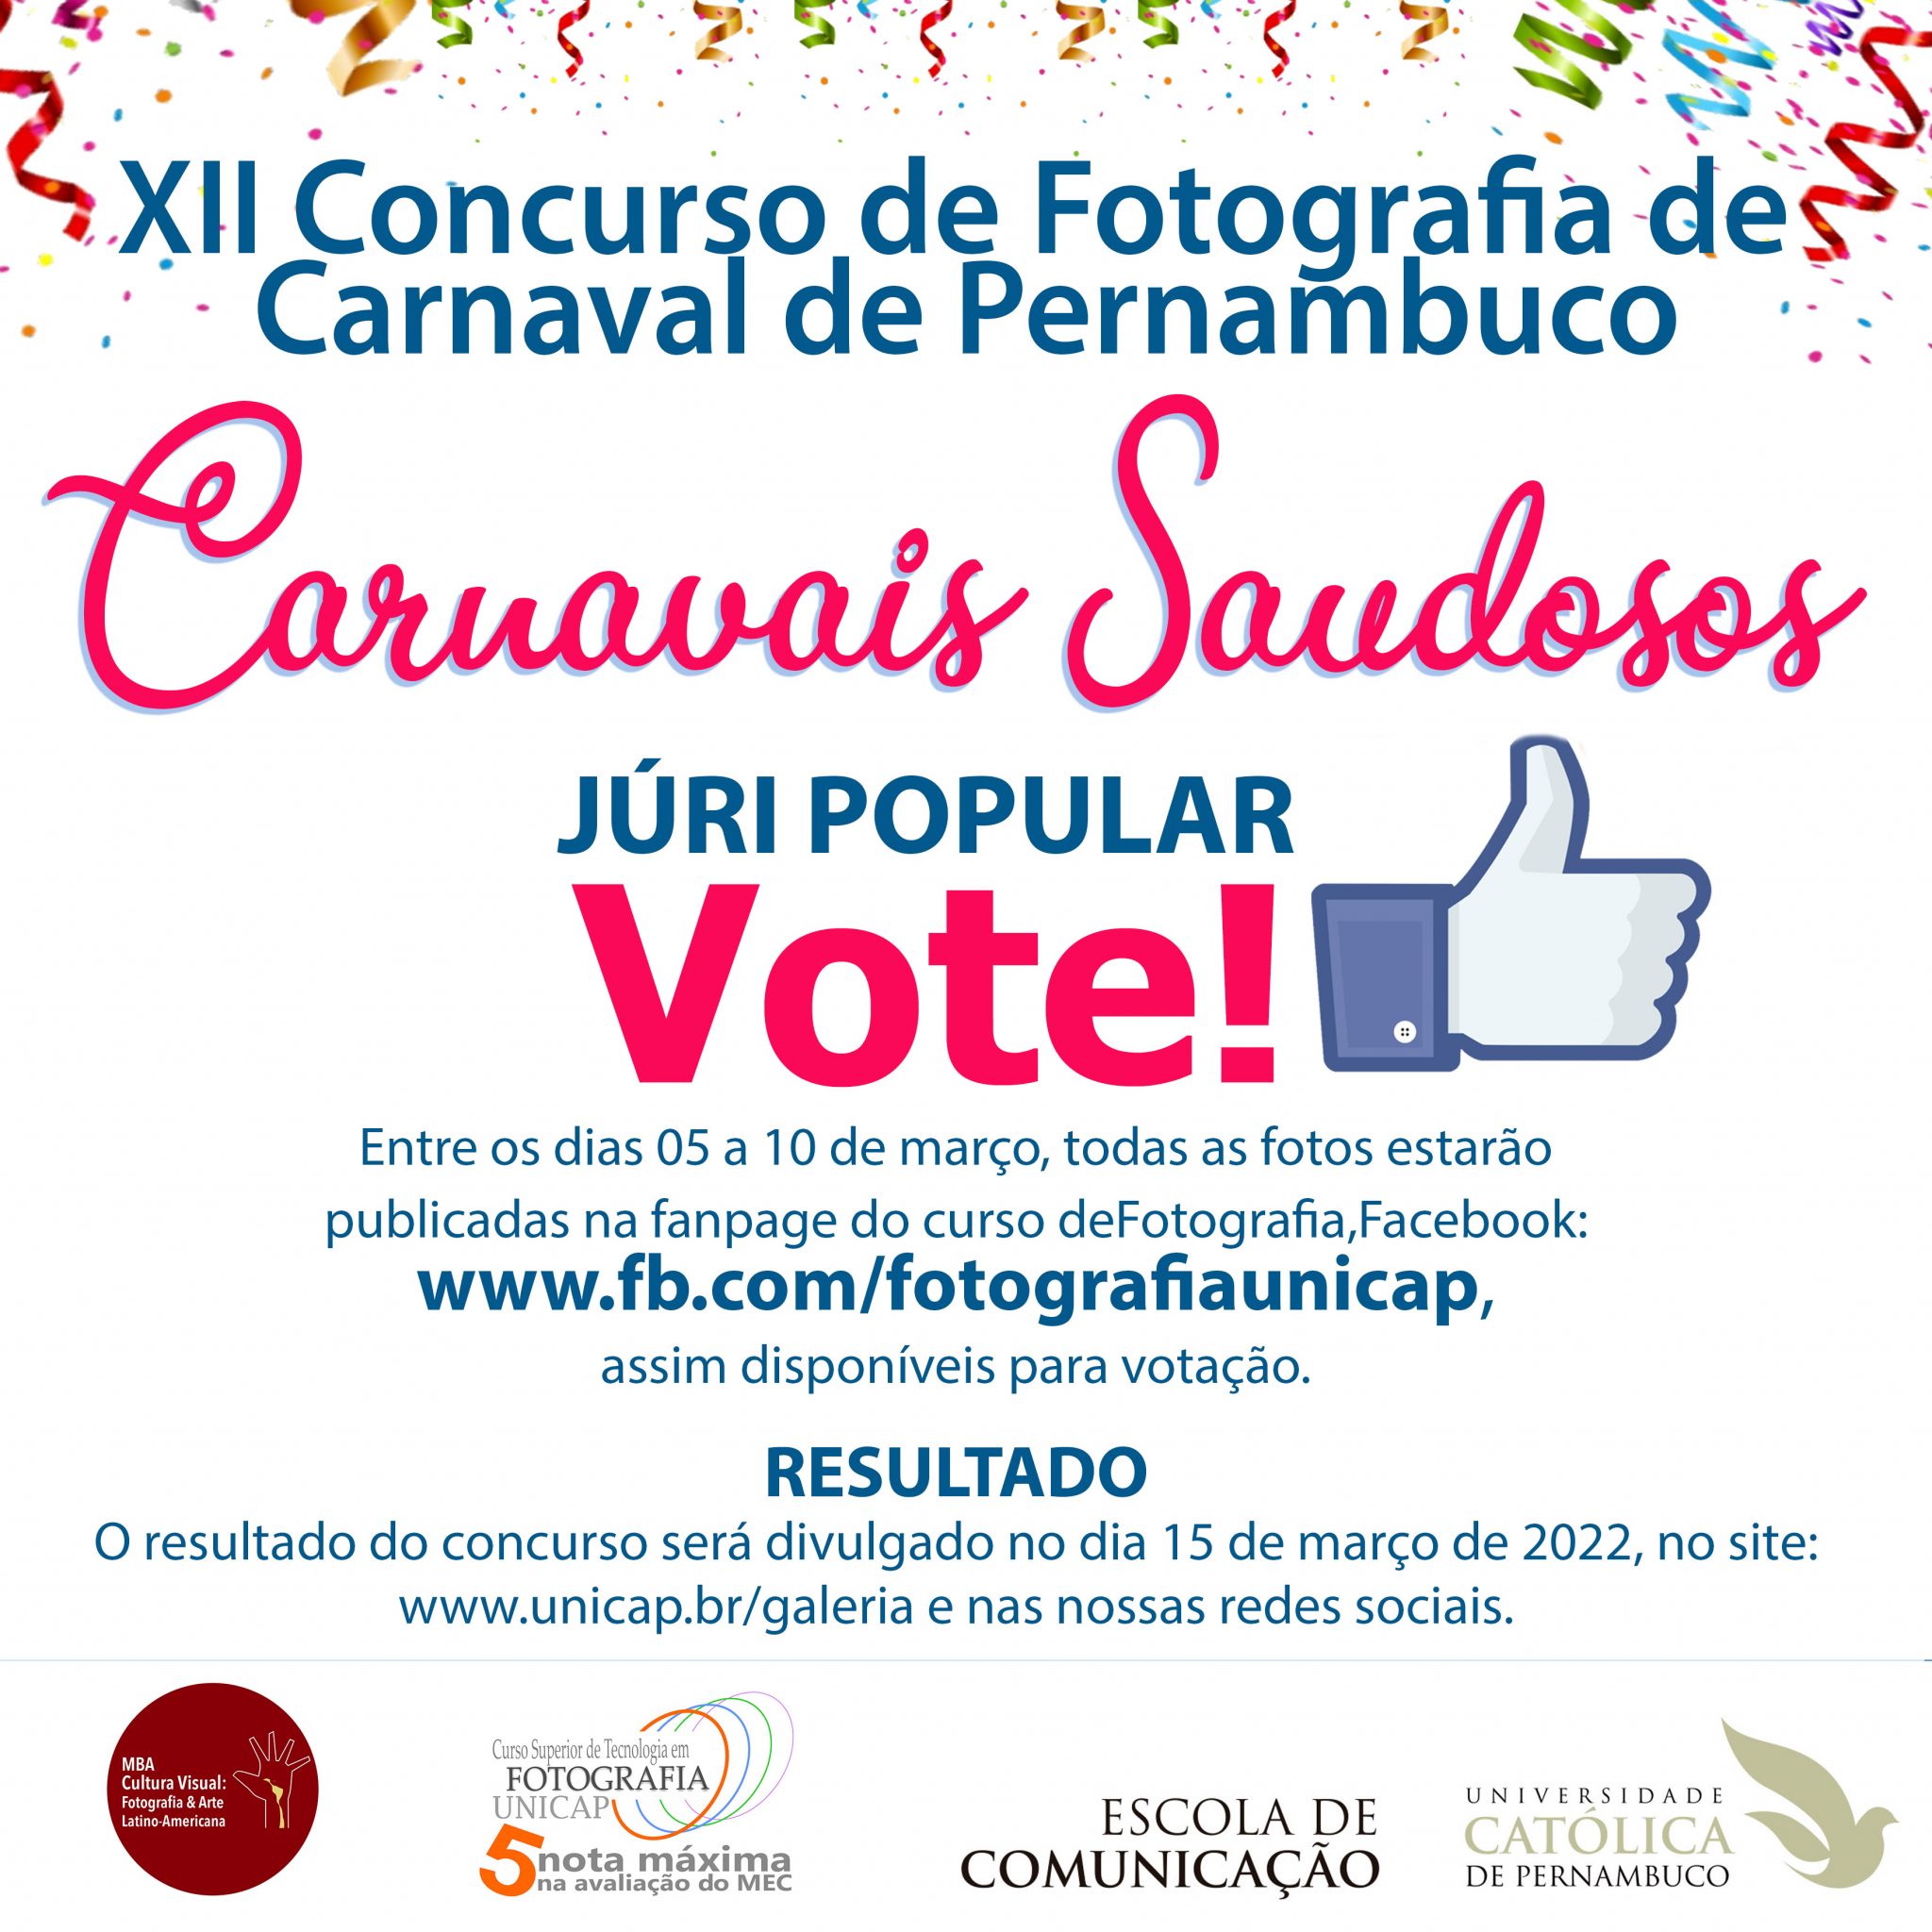 Concurso-Carnaval-2022-face-copiar-1-2048x2048.jpg